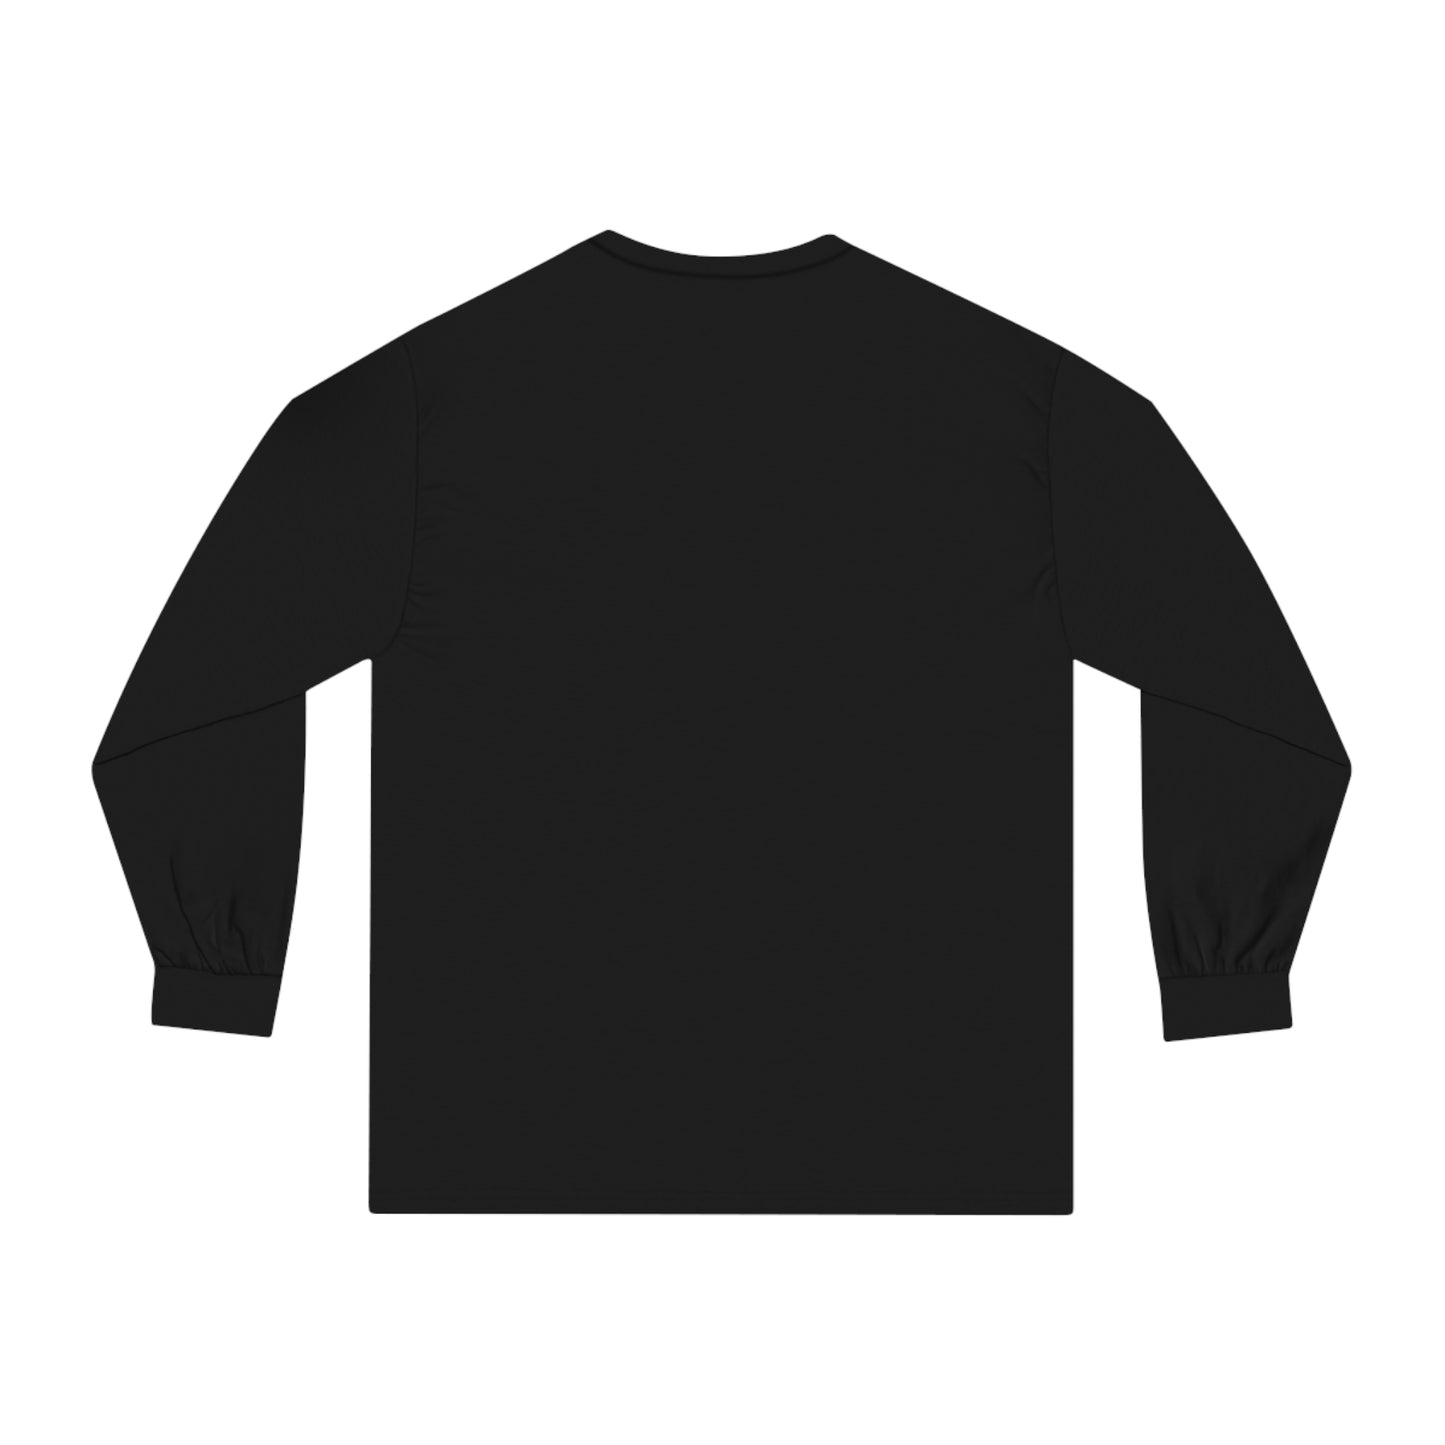 Jah Waldrop Classic Long Sleeve T-Shirt